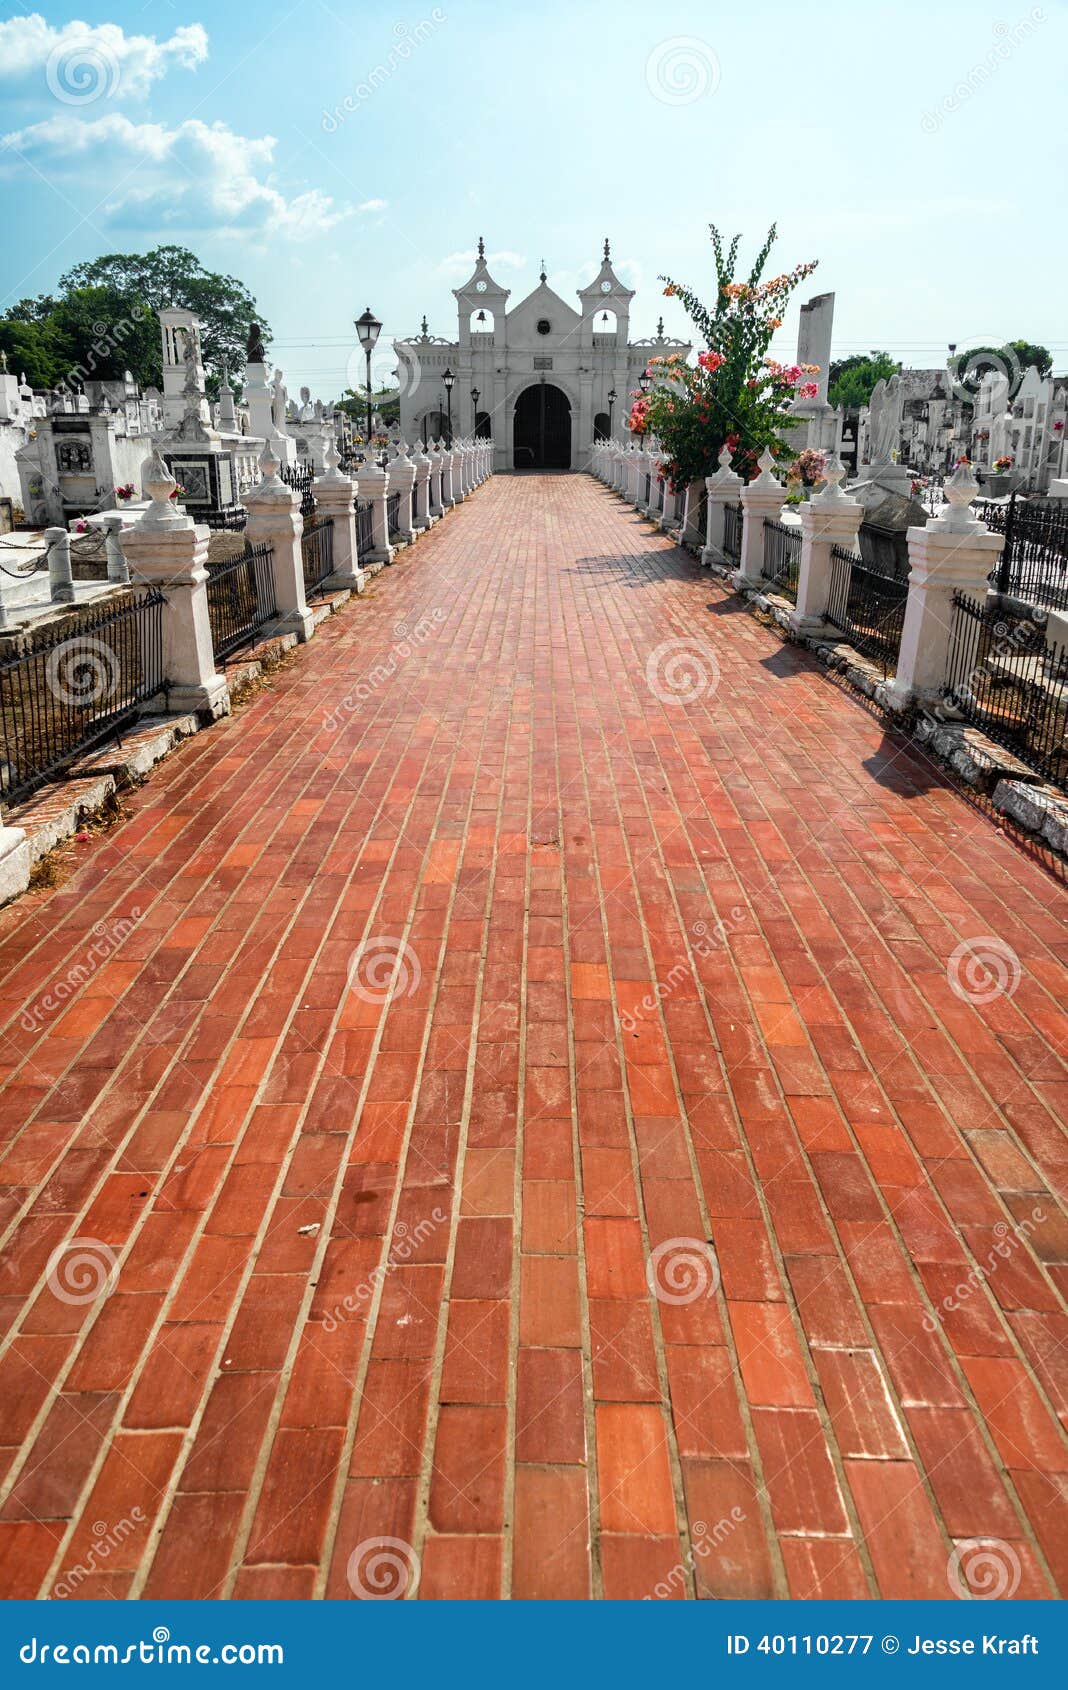 mompox cemetery